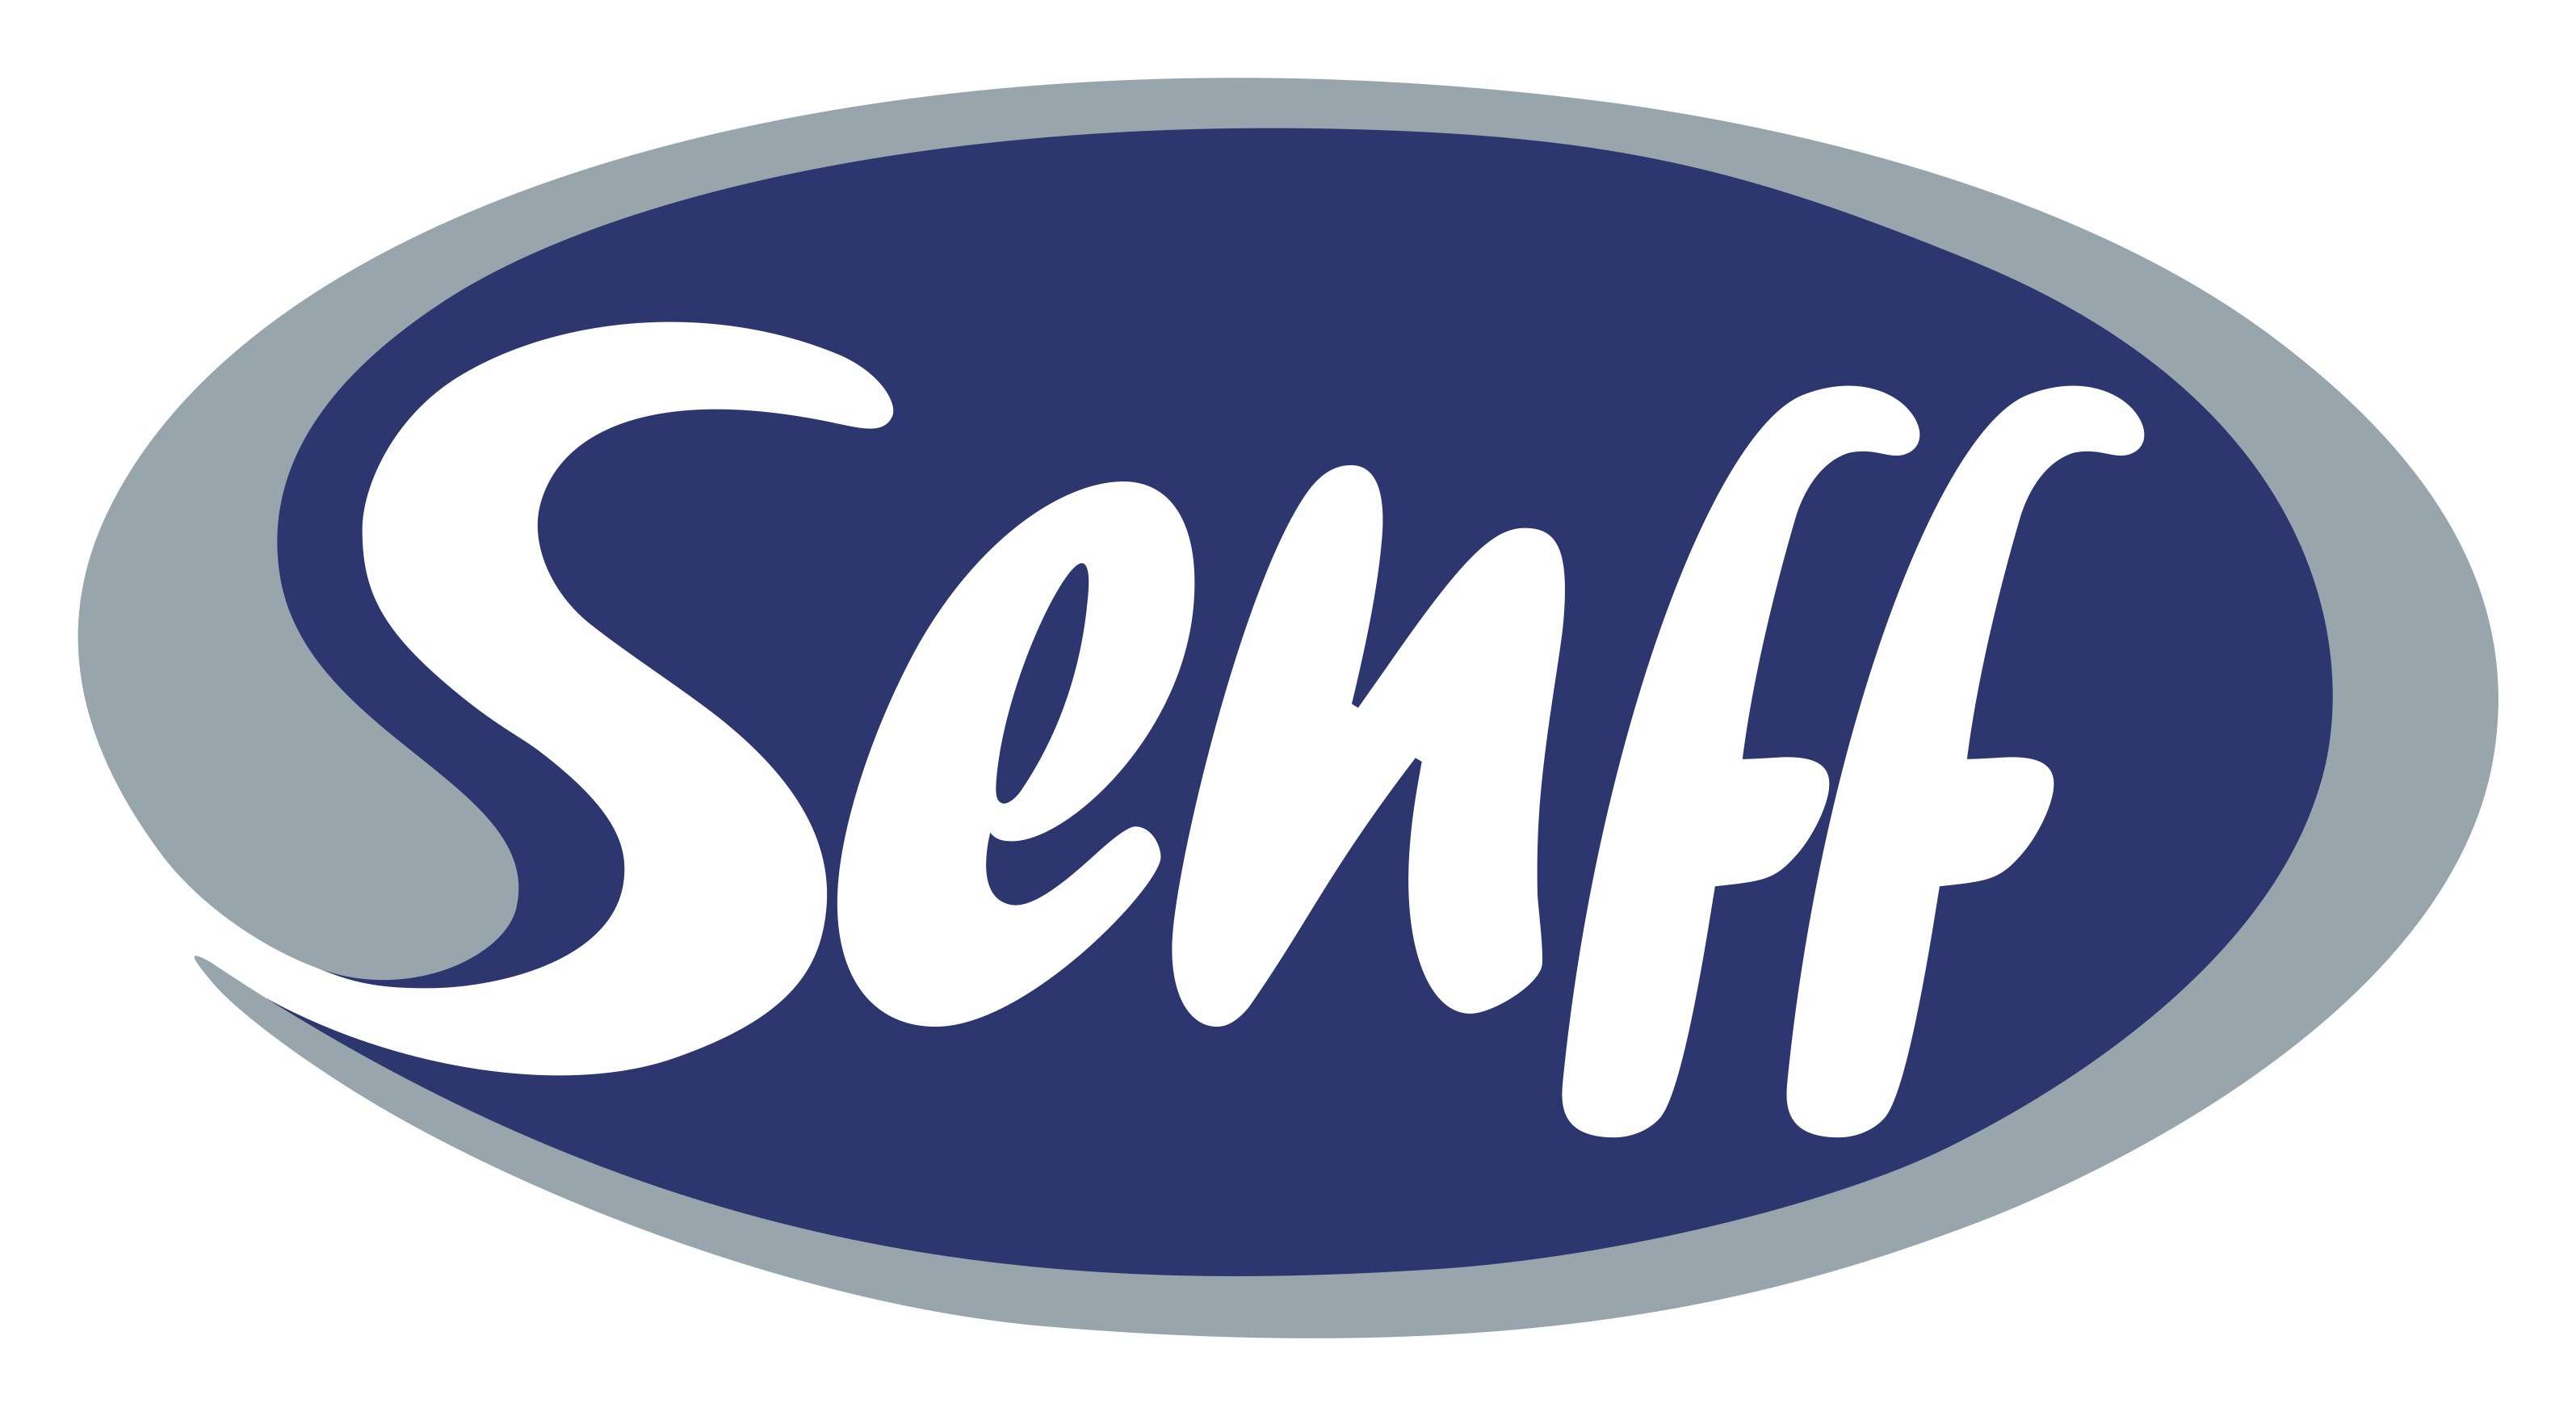 Foto do logotipo do BANCO SENFF S.A.